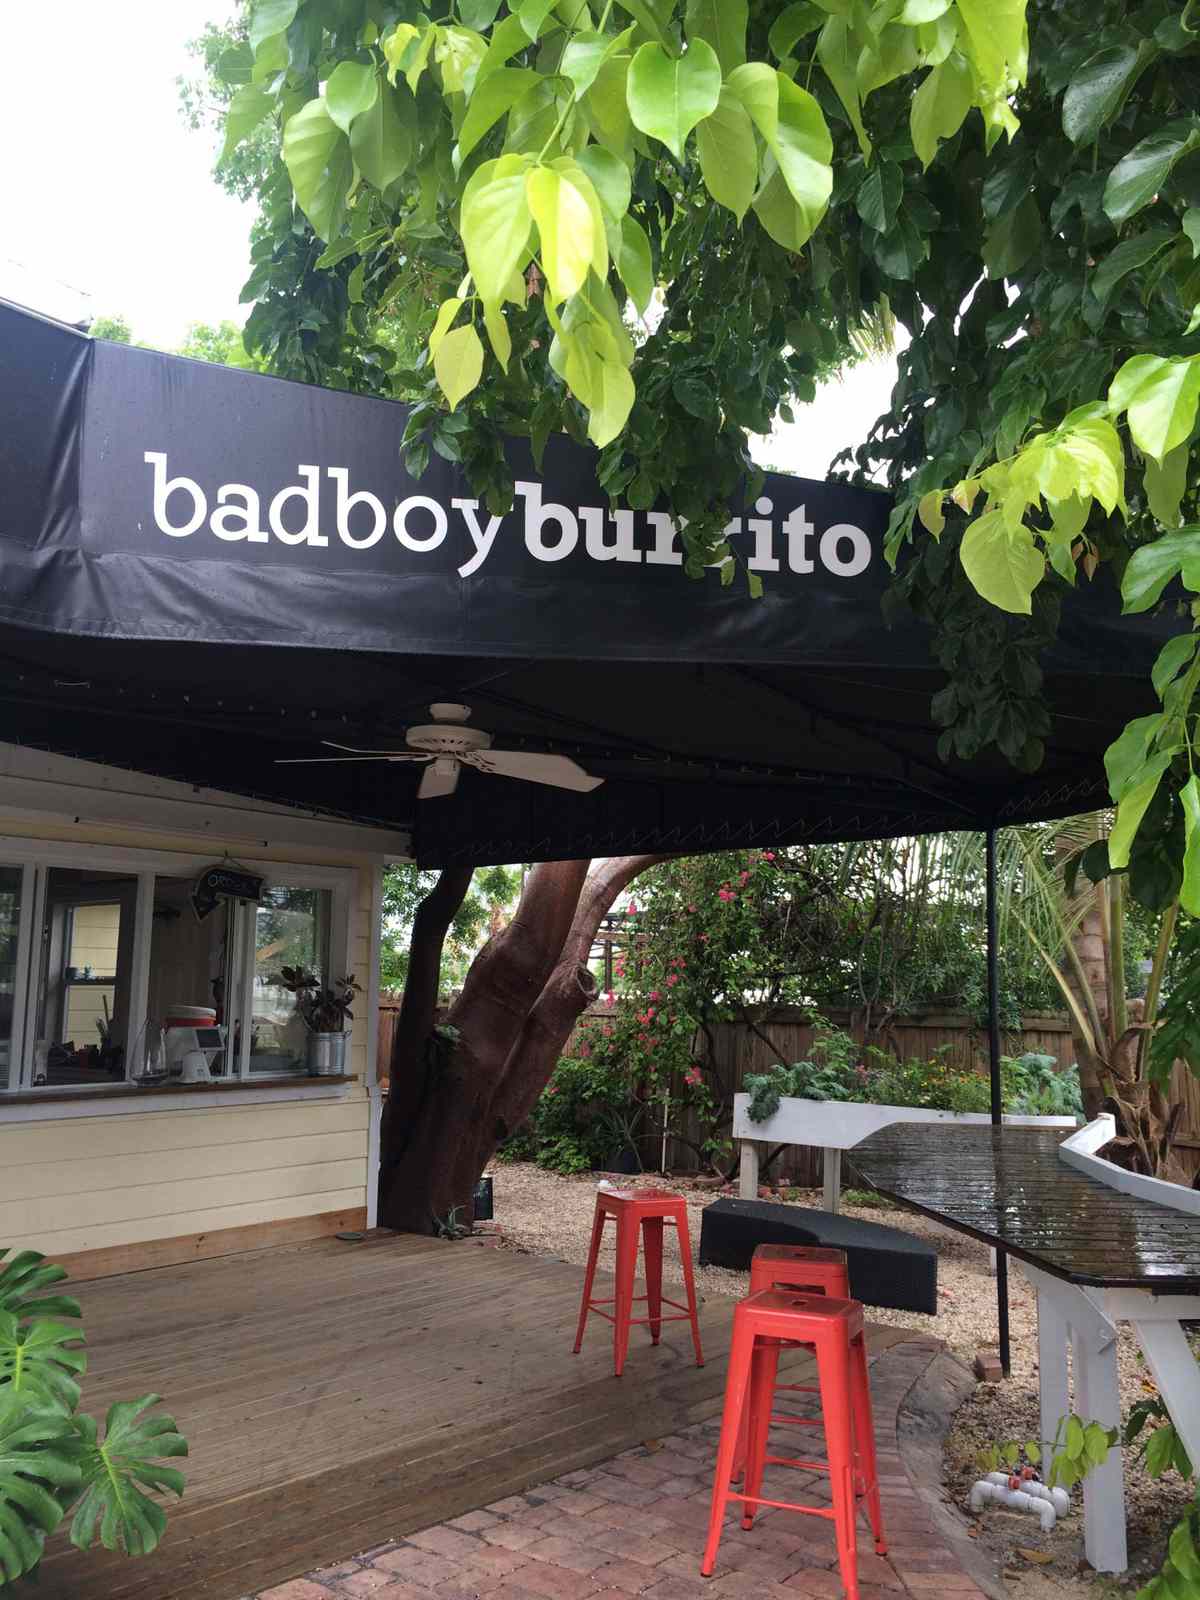 Bad Boy Burrito in Islamorada, FL